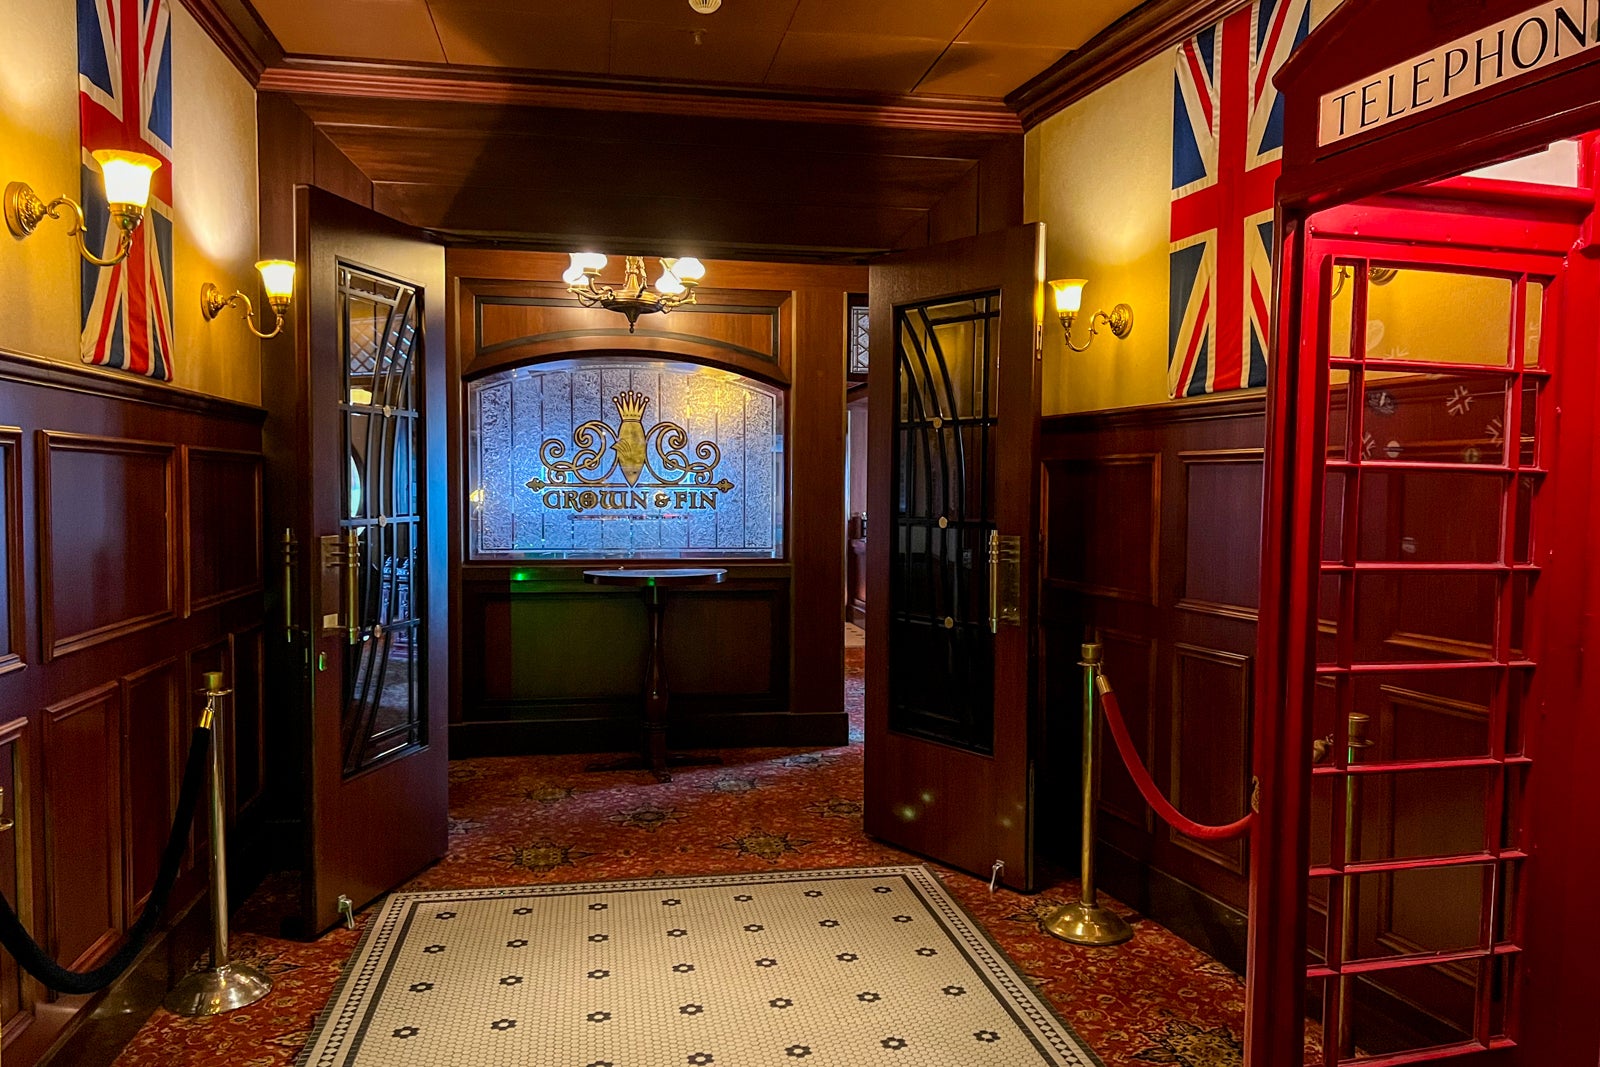 Crown and Fin pub on Disney Wonder